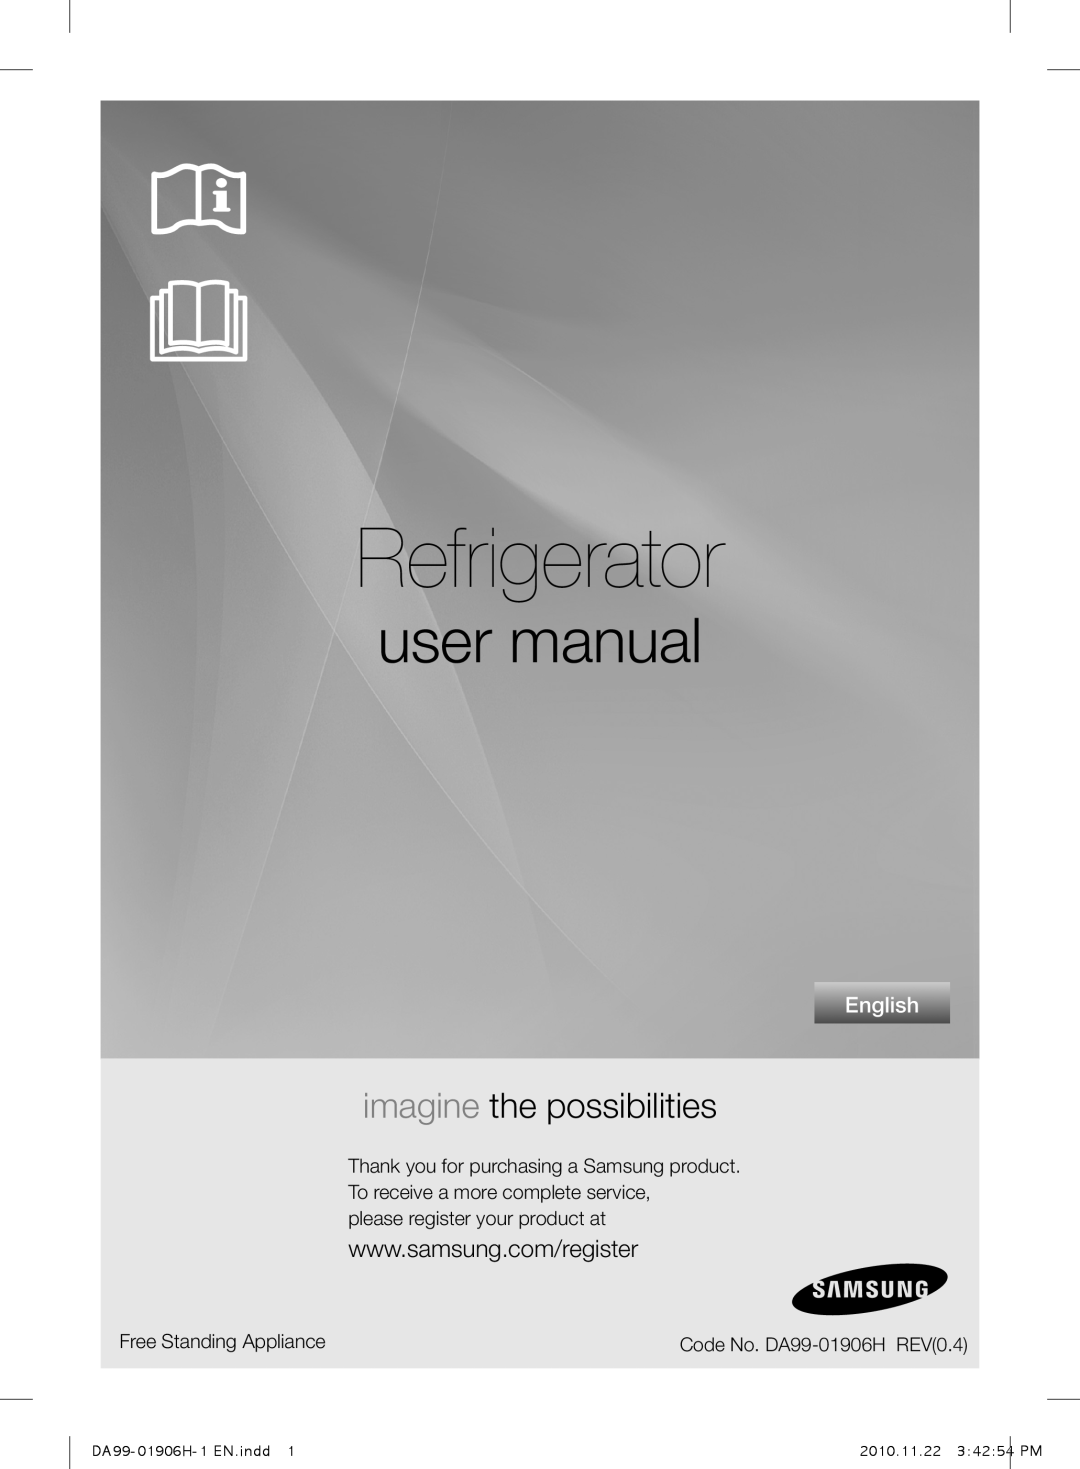 Samsung RT59PMSW1/XEF manual Refrigerator, user manual, imagine the possibilities, English, Code No. DA99-01906H REV0.4 